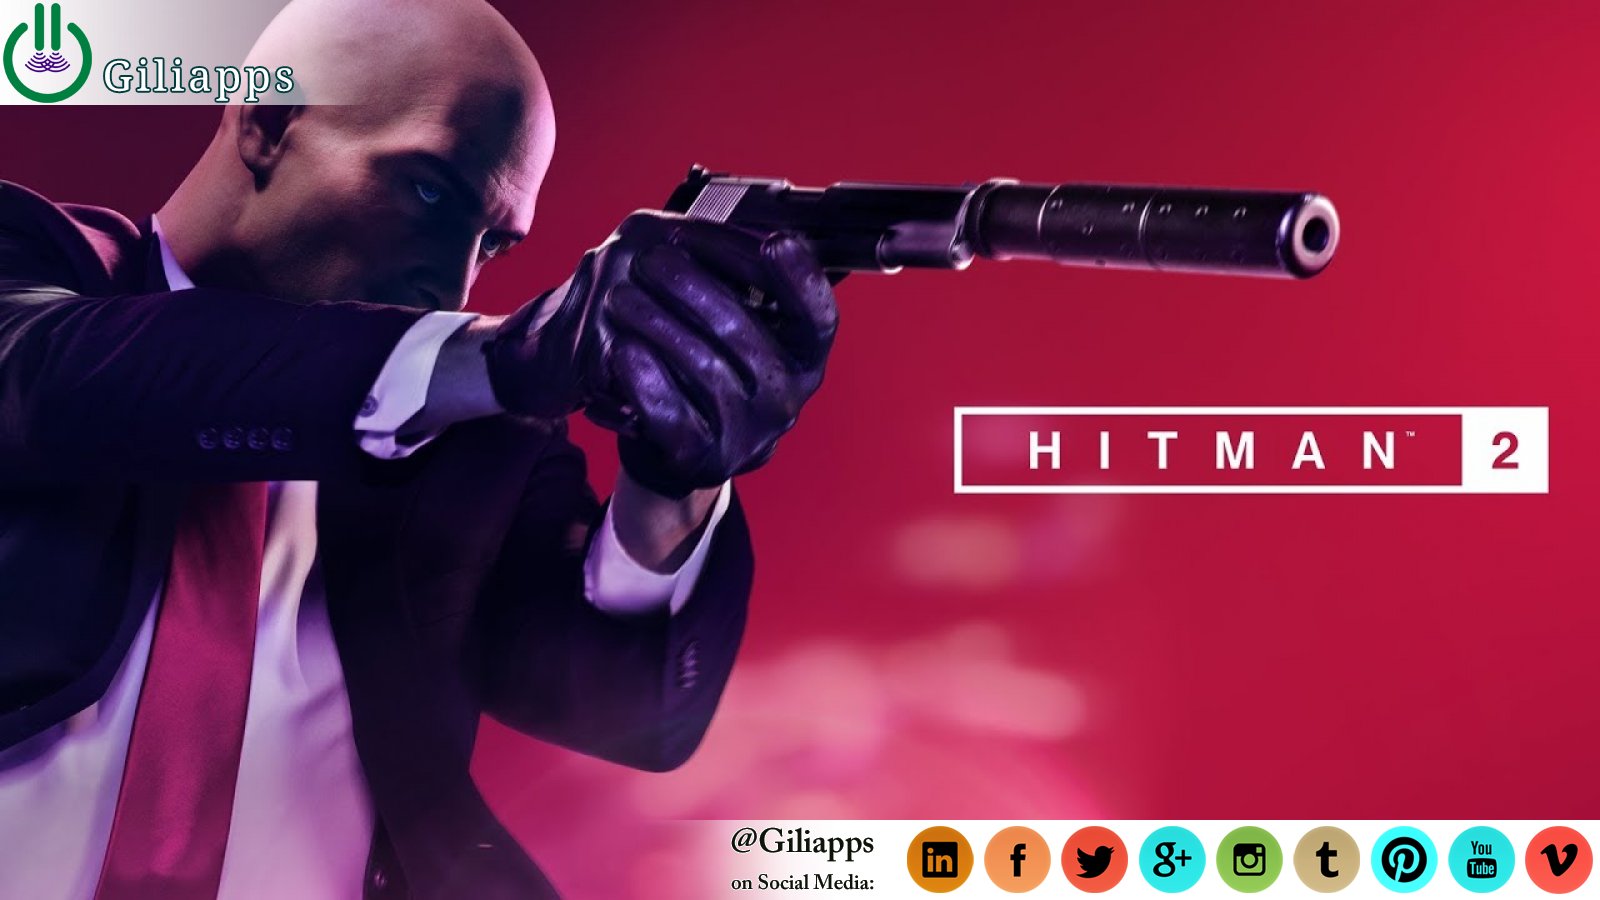 Hitman 2  will release on 13 Nov 2018